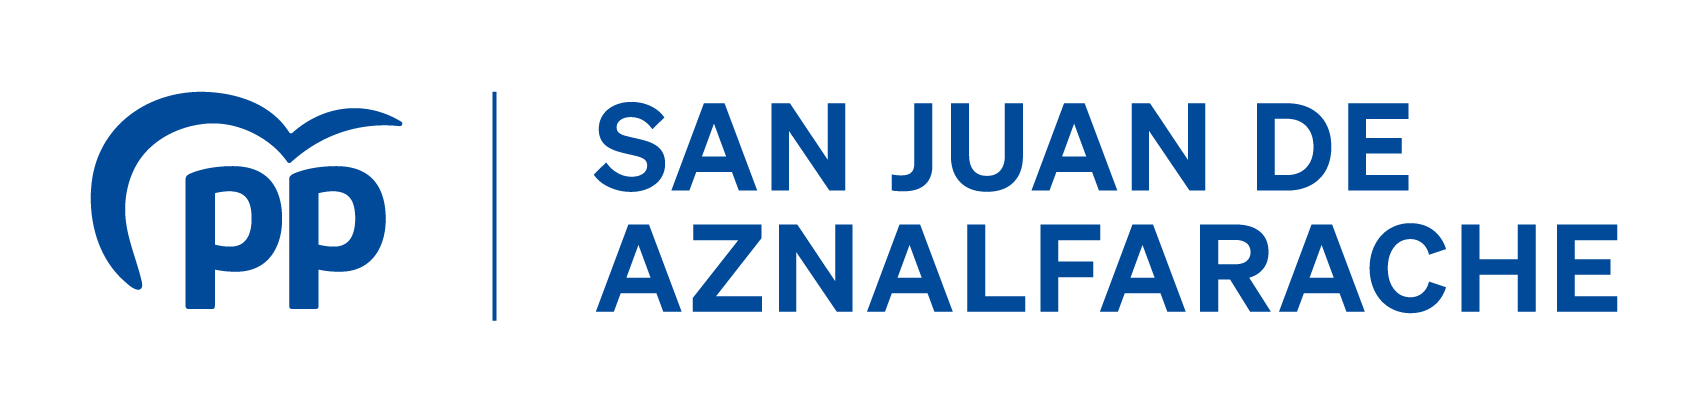 Partido Popular San Juan de Aznalfarache